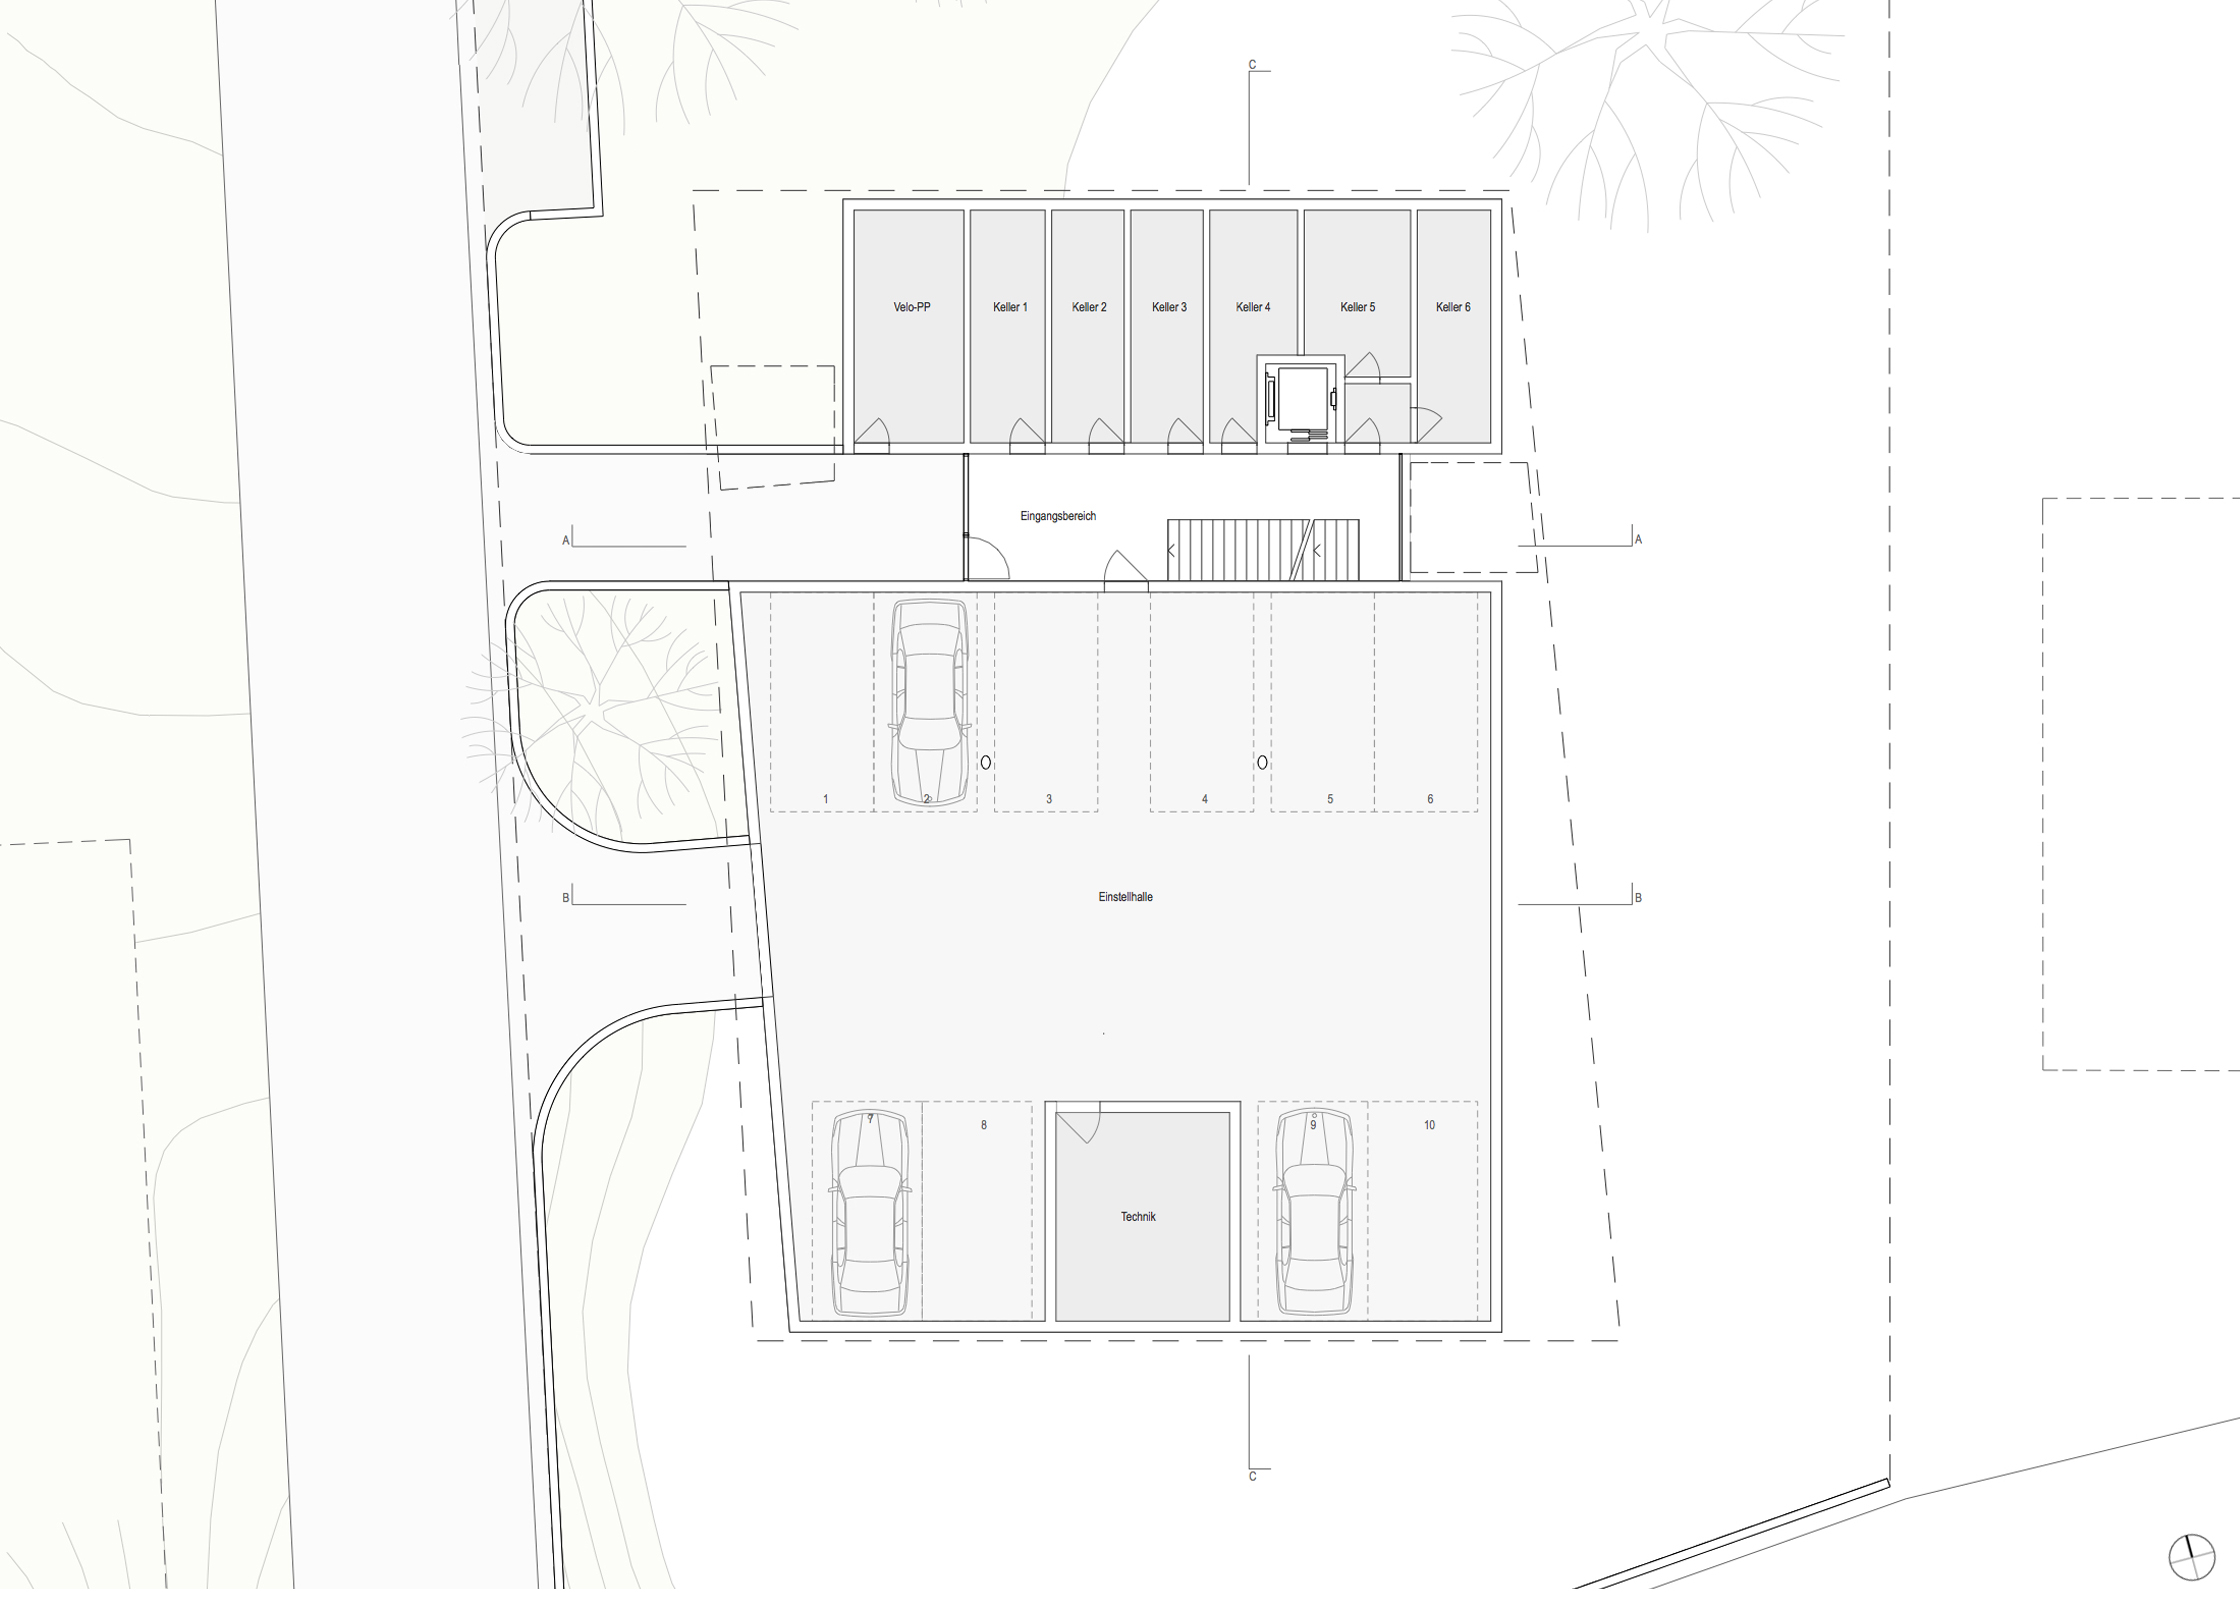 Mehrfamilienhaus Mühlerain Meilen, Eggenspieler Architekten AG